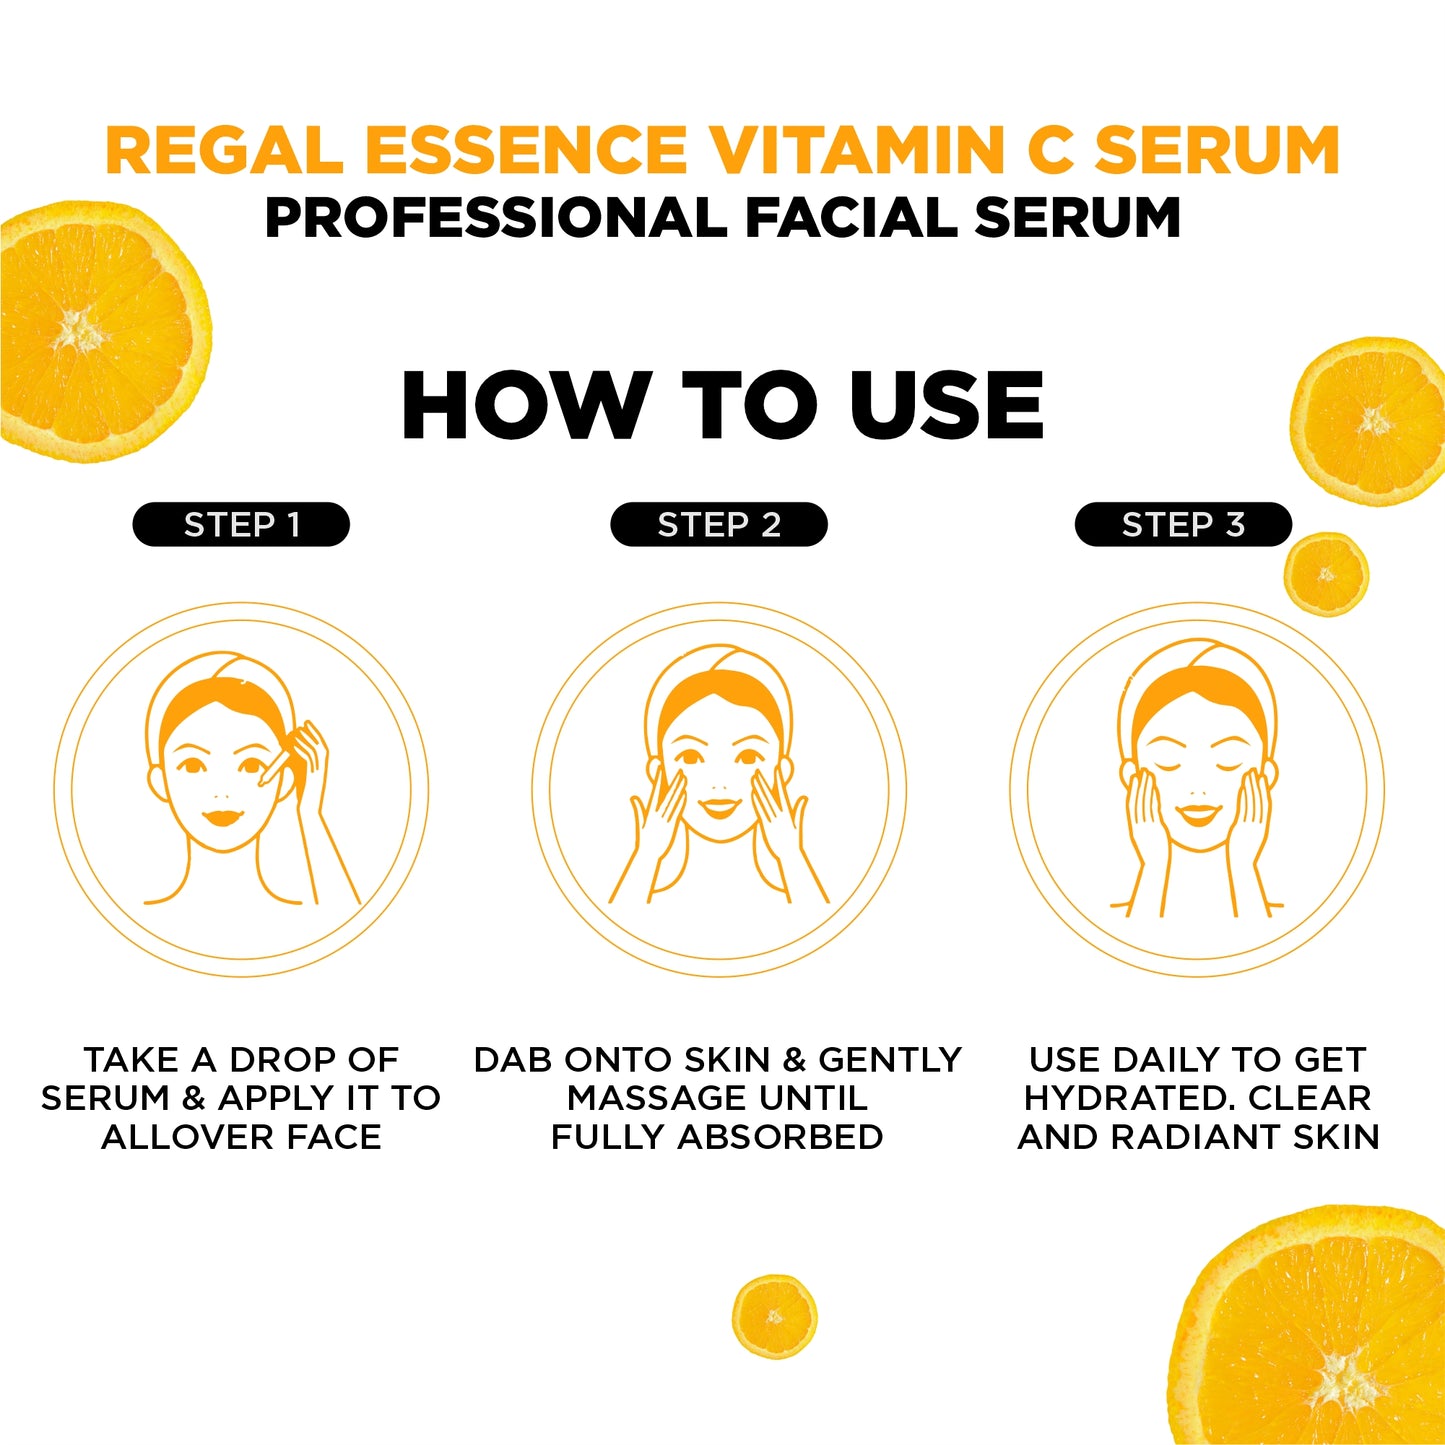 Regal Essence Glow Sunscreen SPF 50 & Vitamin C 20% Facial Serum (30 ml)  for Better Skin  ( COMBO PACK ) Regal Essence